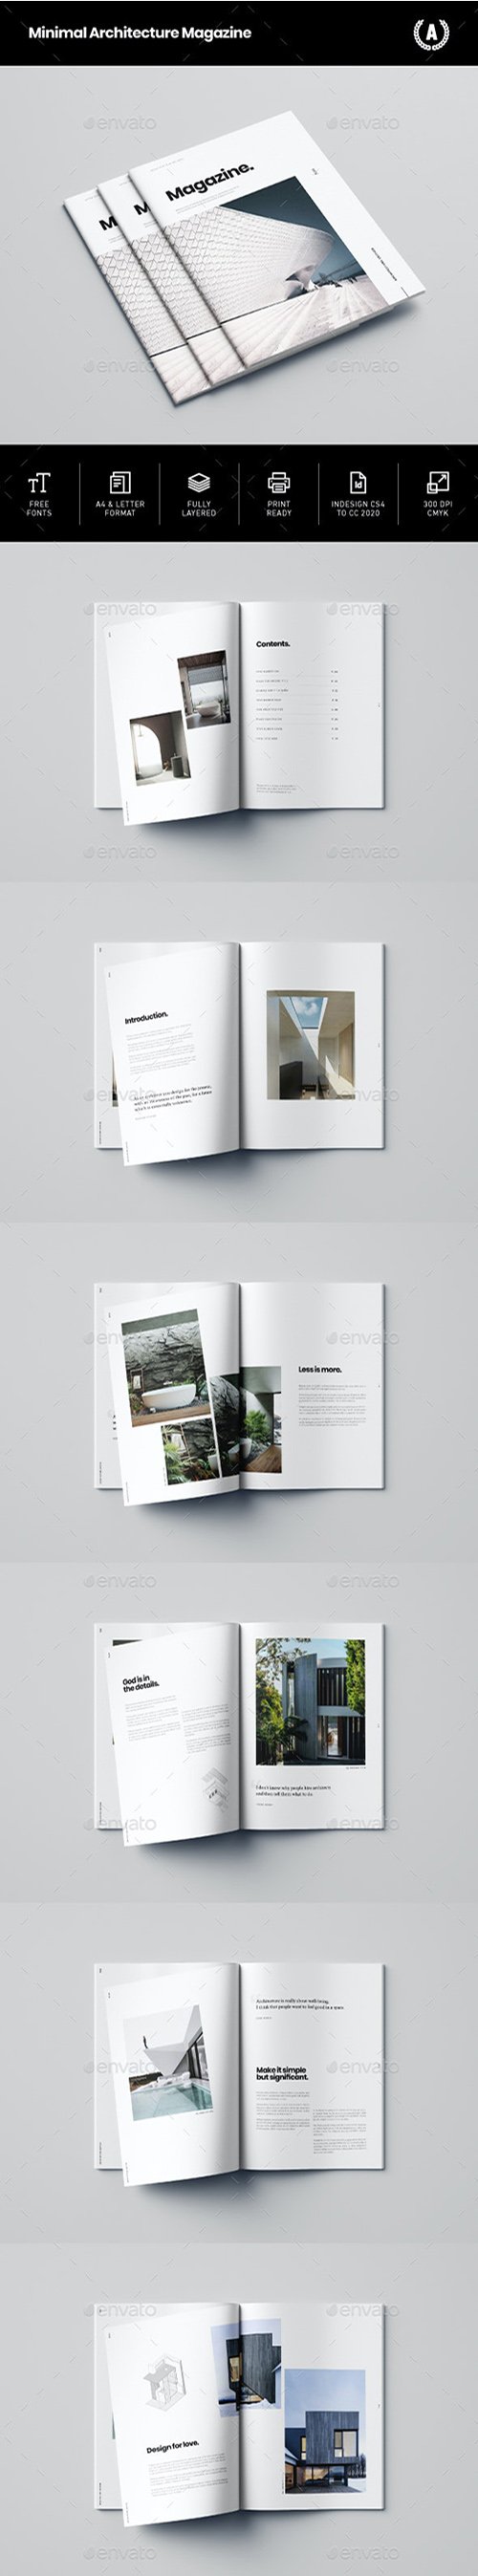 Minimal Architecture Magazine